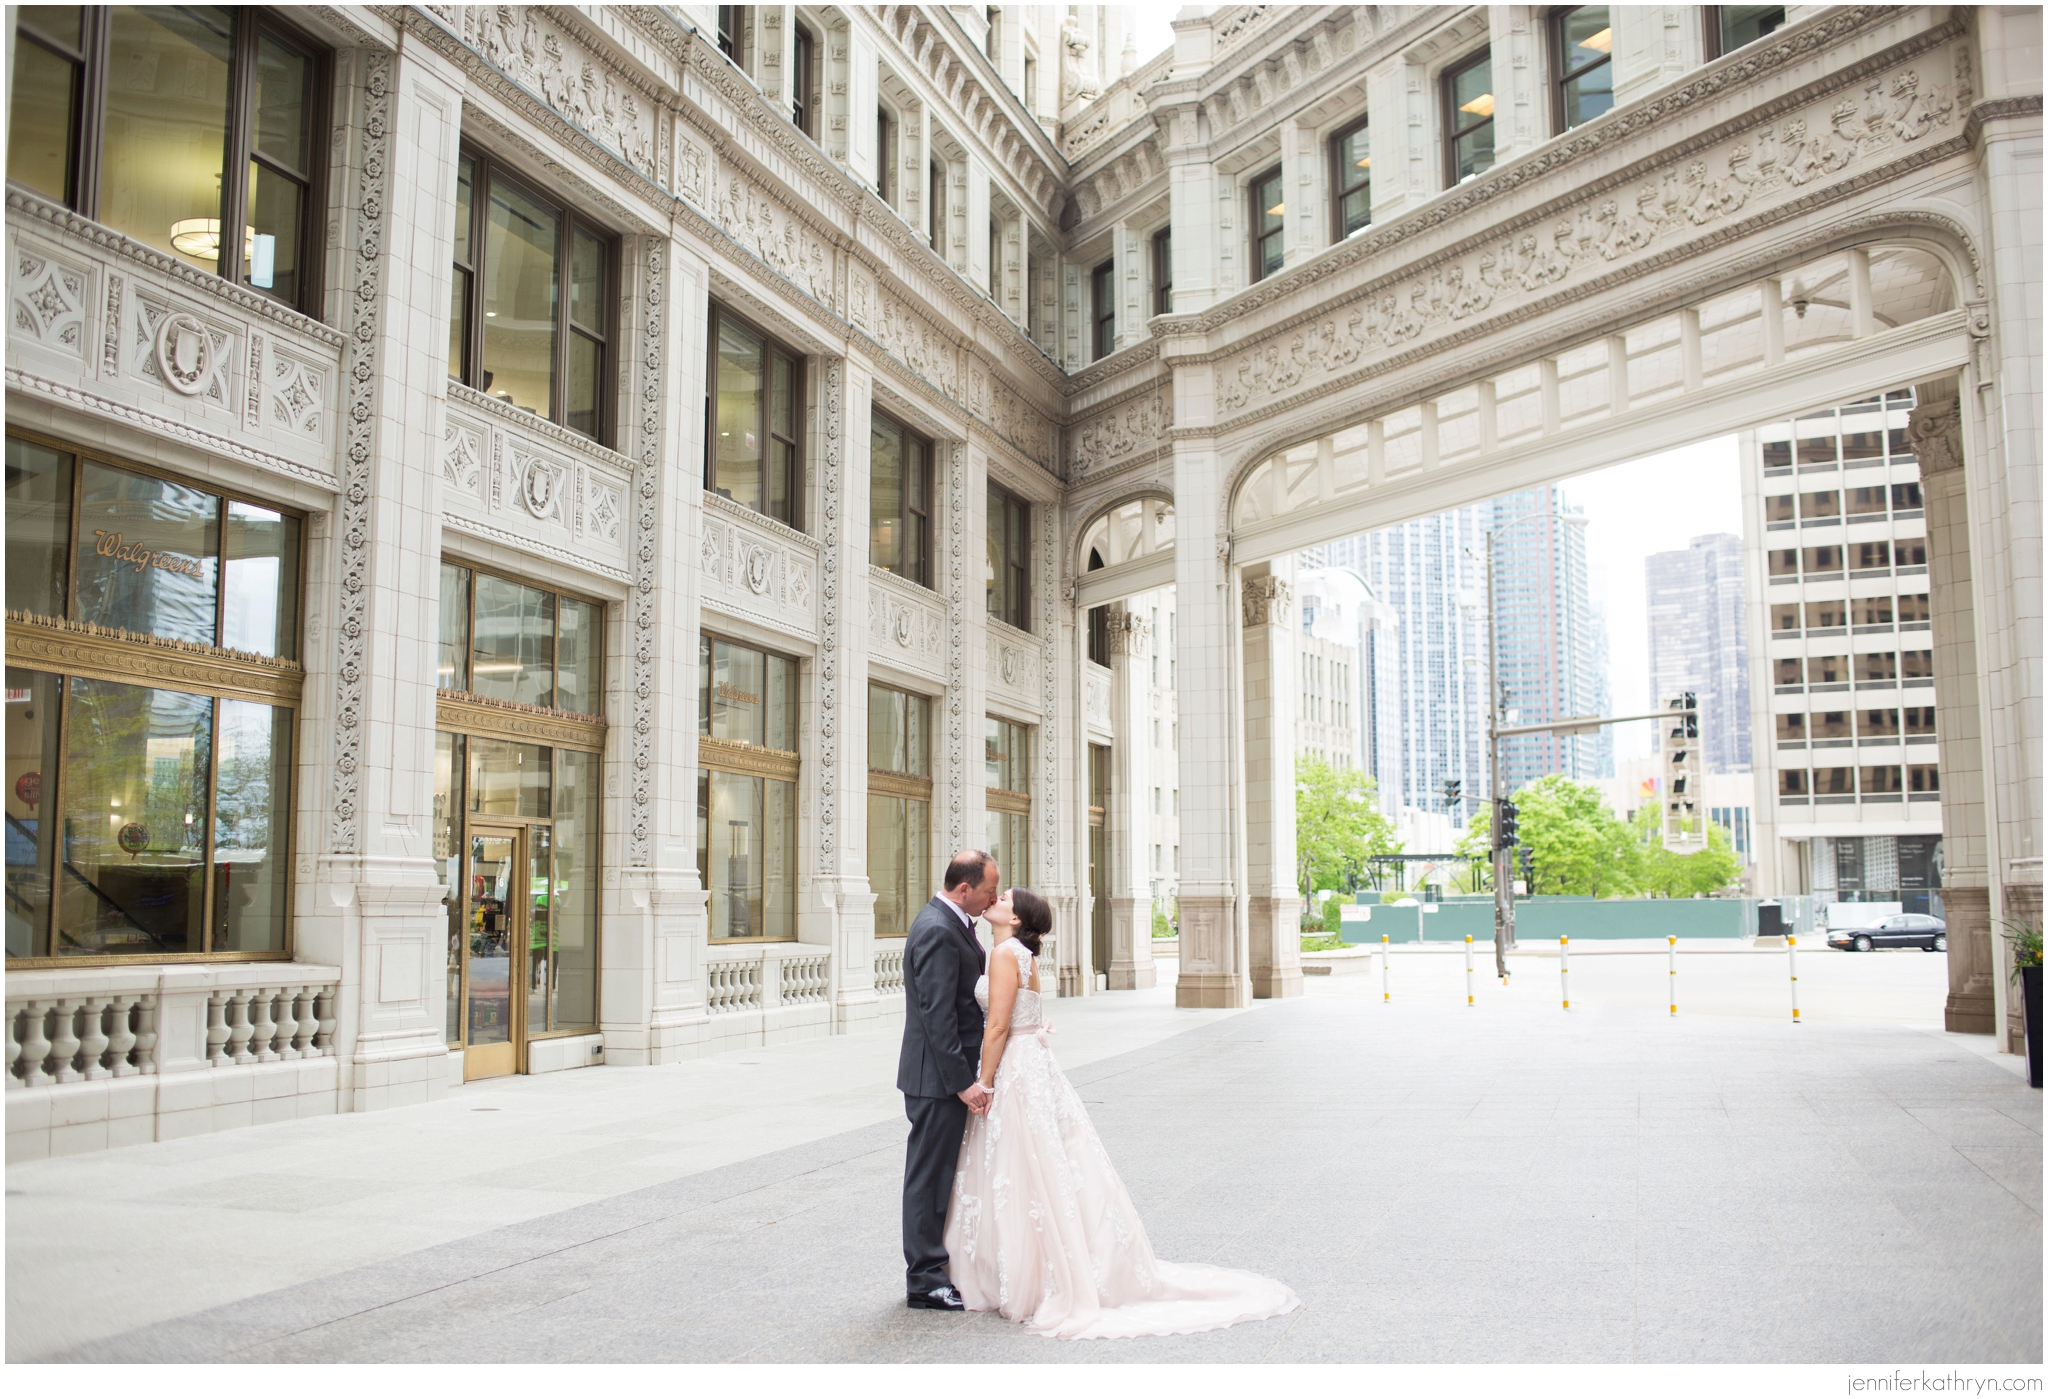 5-14-16 Jill + Tim Wedding The Rookery Building Chicago, IL (C)2016 Jennifer Kathryn Photography